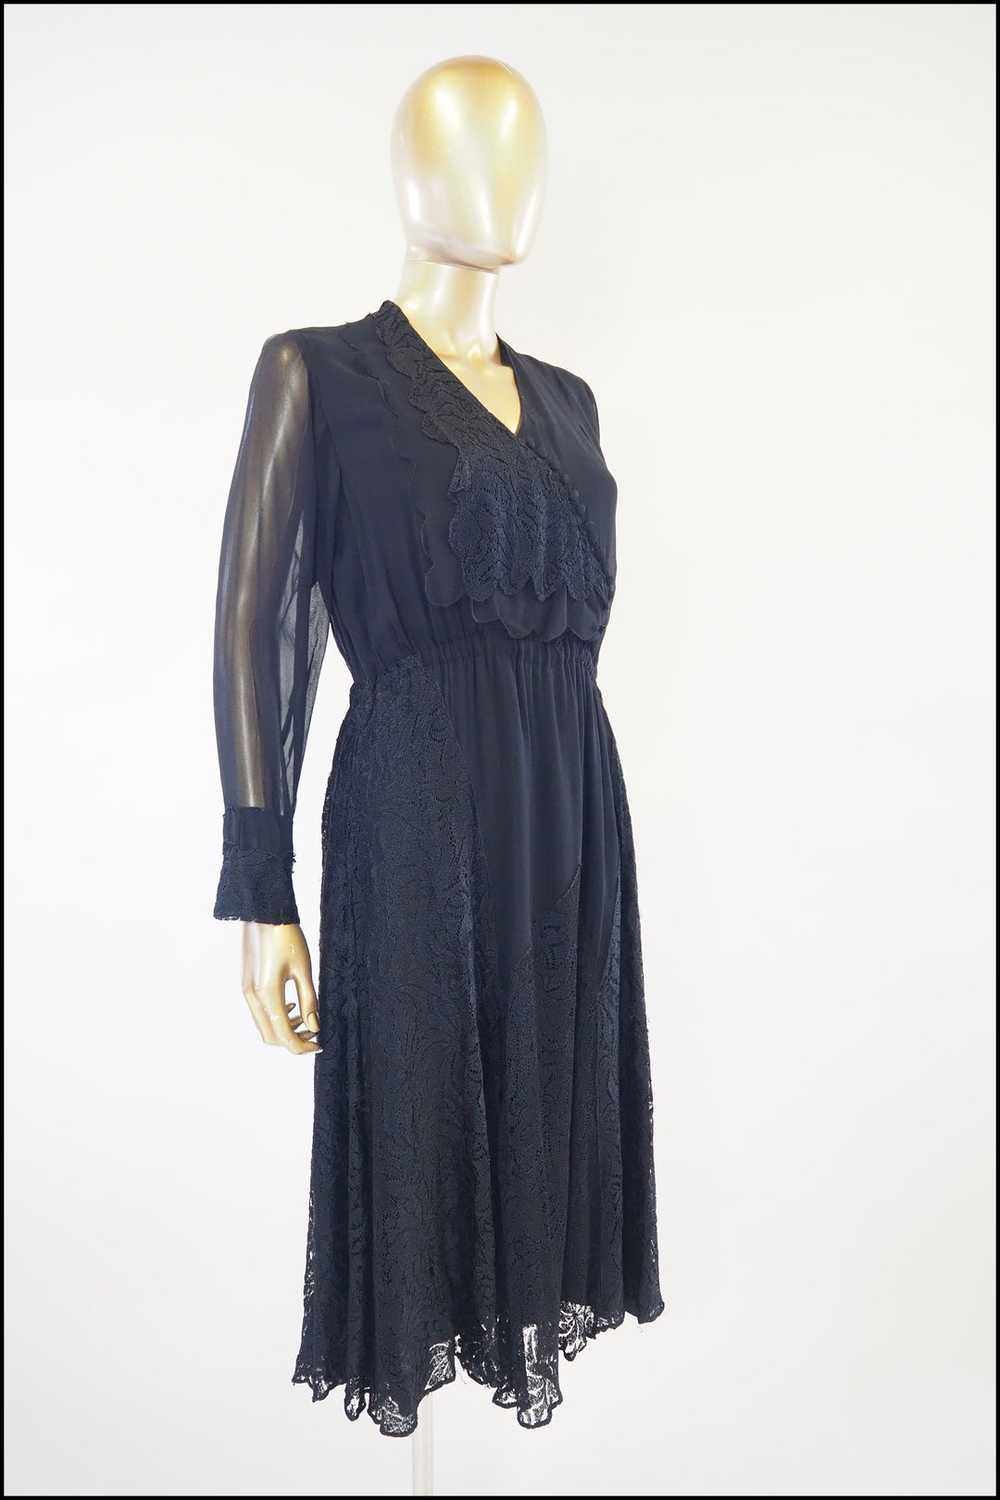 Vintage 1930s Black Chiffon Lace Dress - image 6